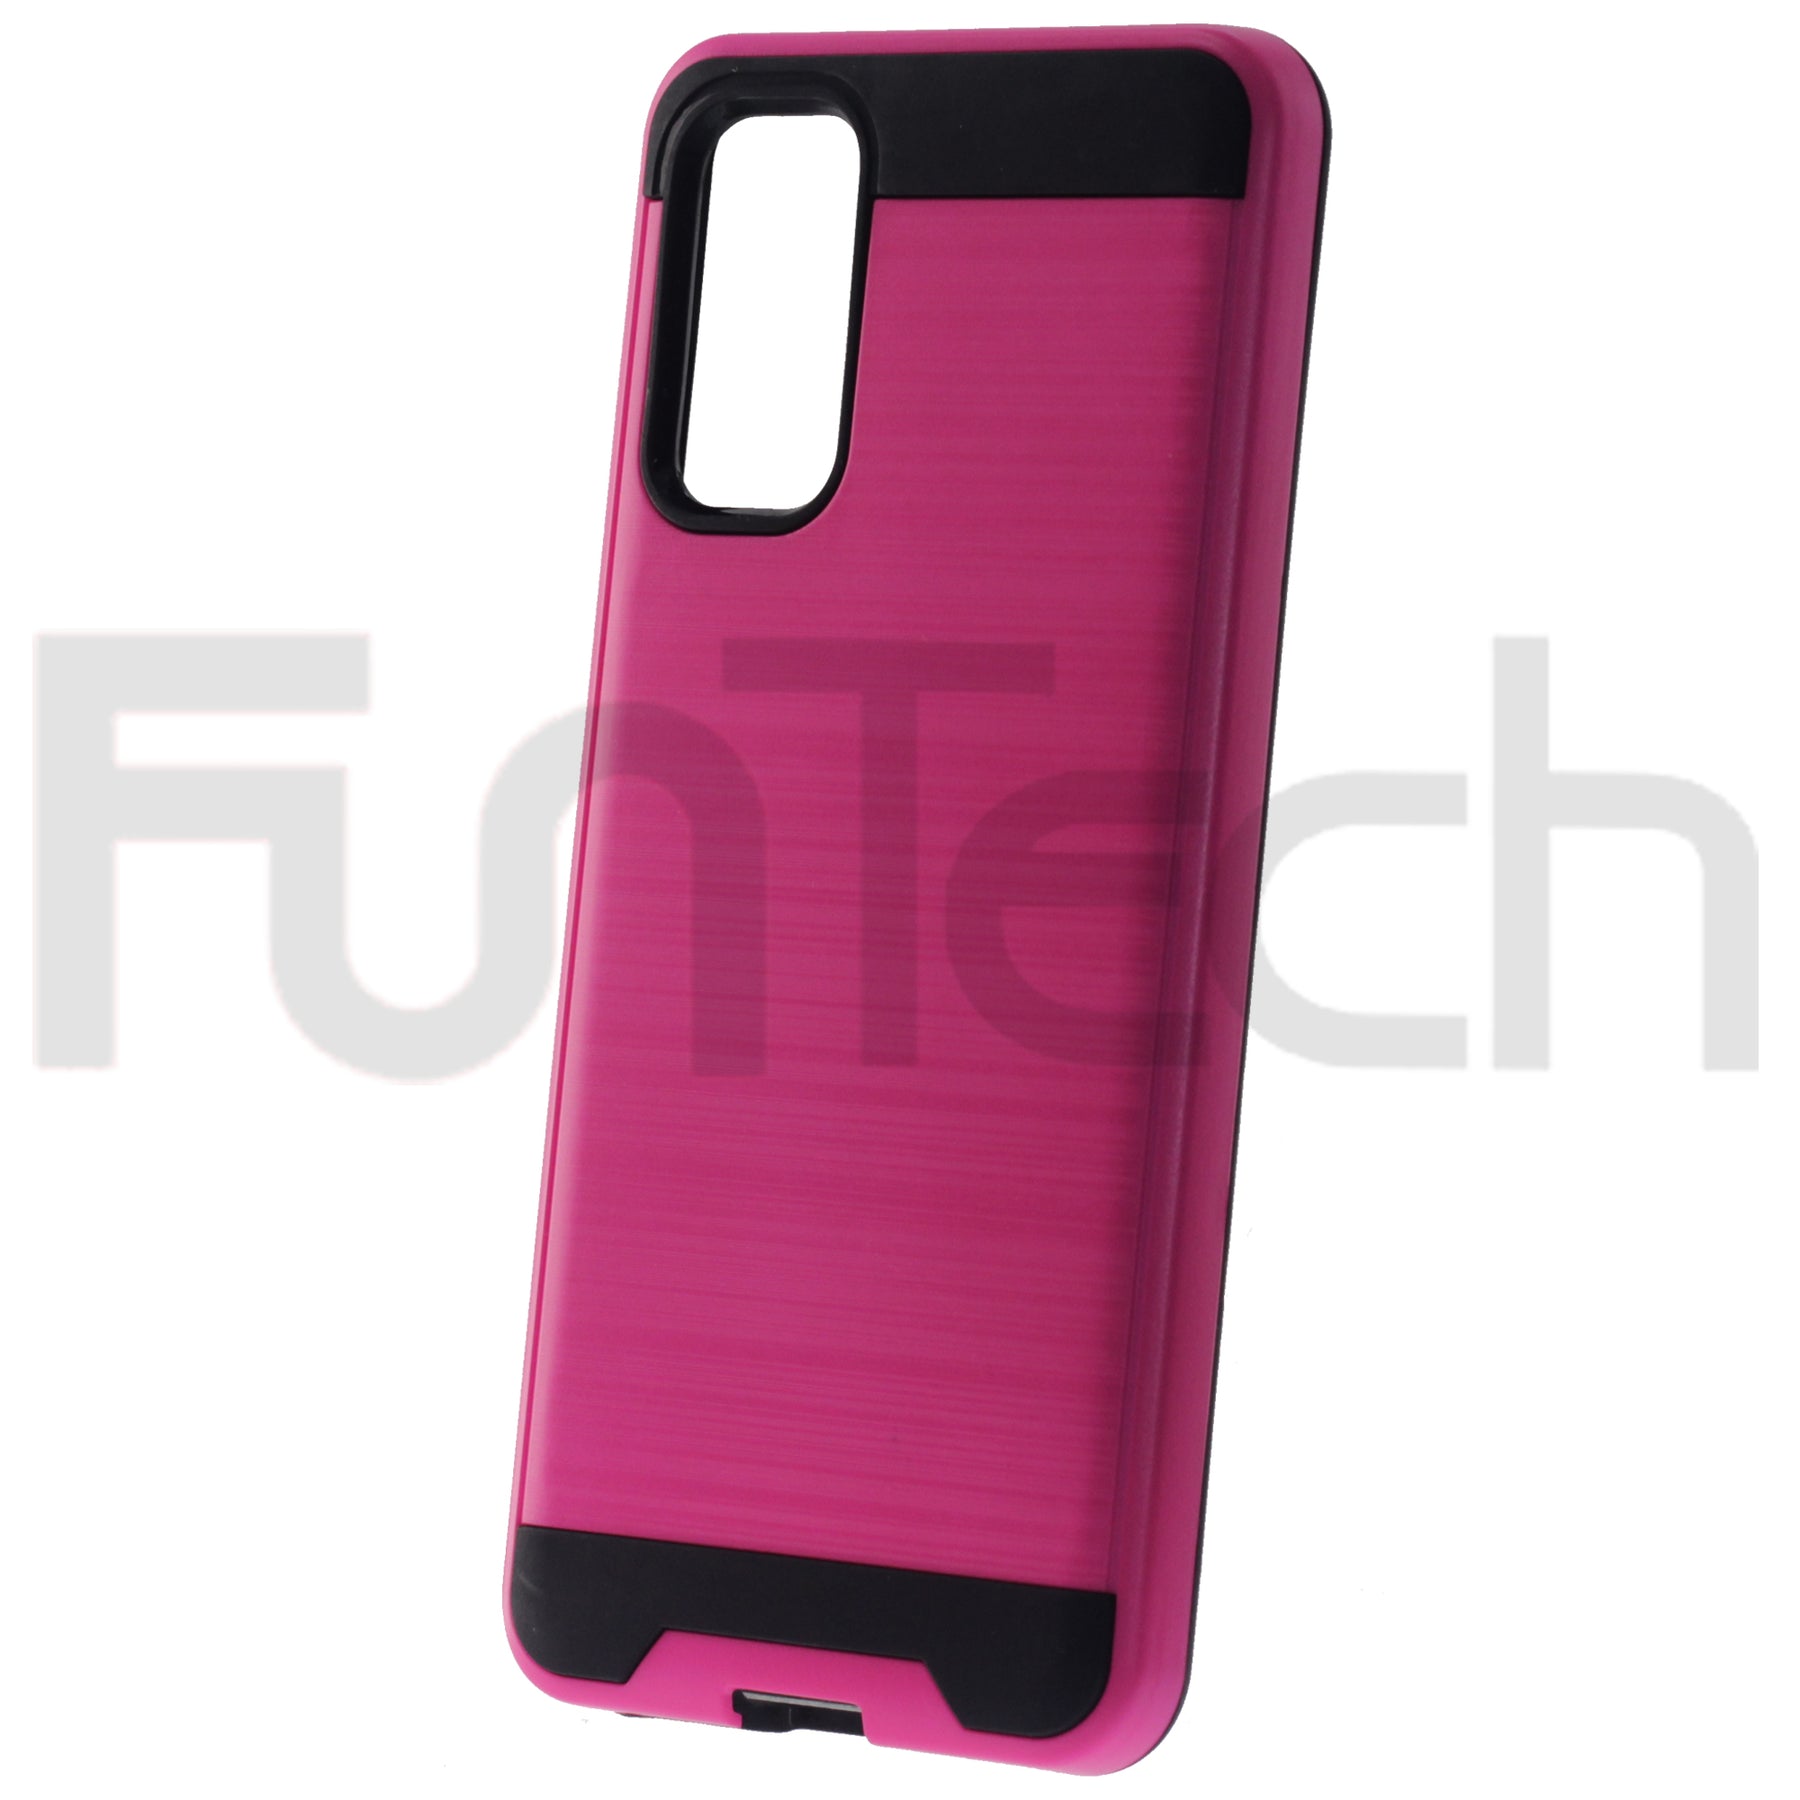 Samsung S20, Slim Armor Case, Color Pink.